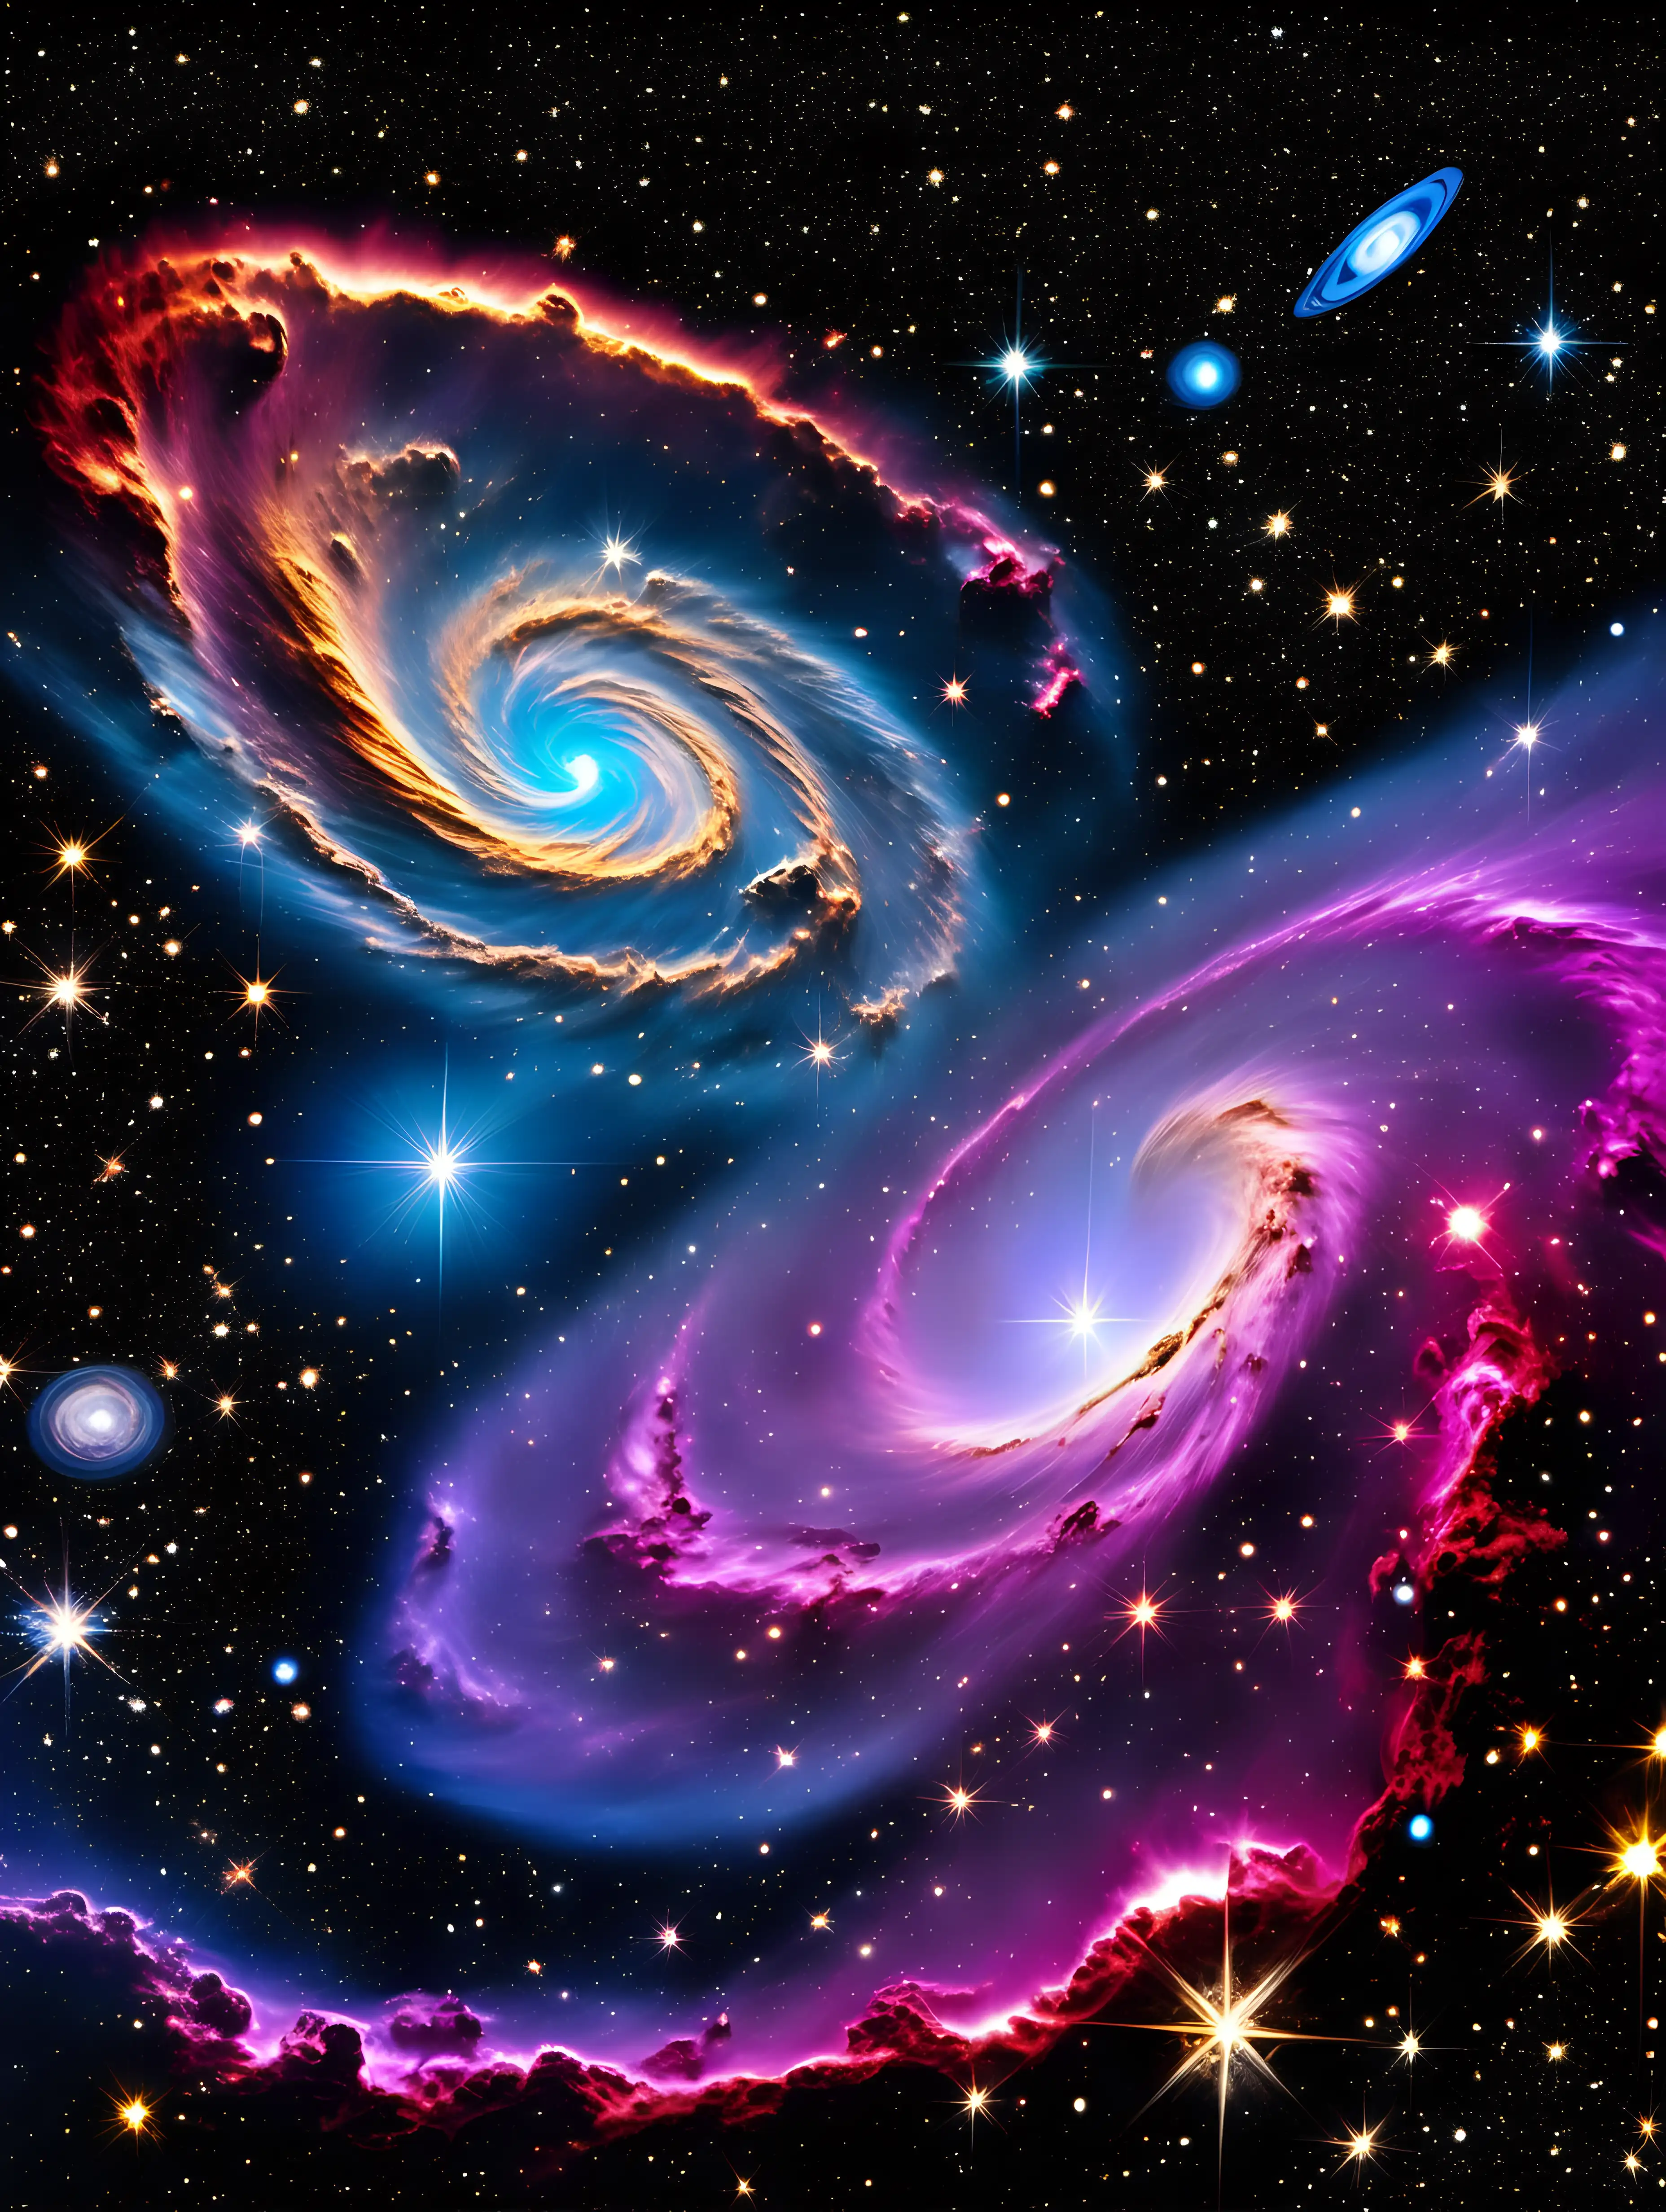 Ethereal Cosmic Symphony Swirling Nebulae and Celestial Orbits